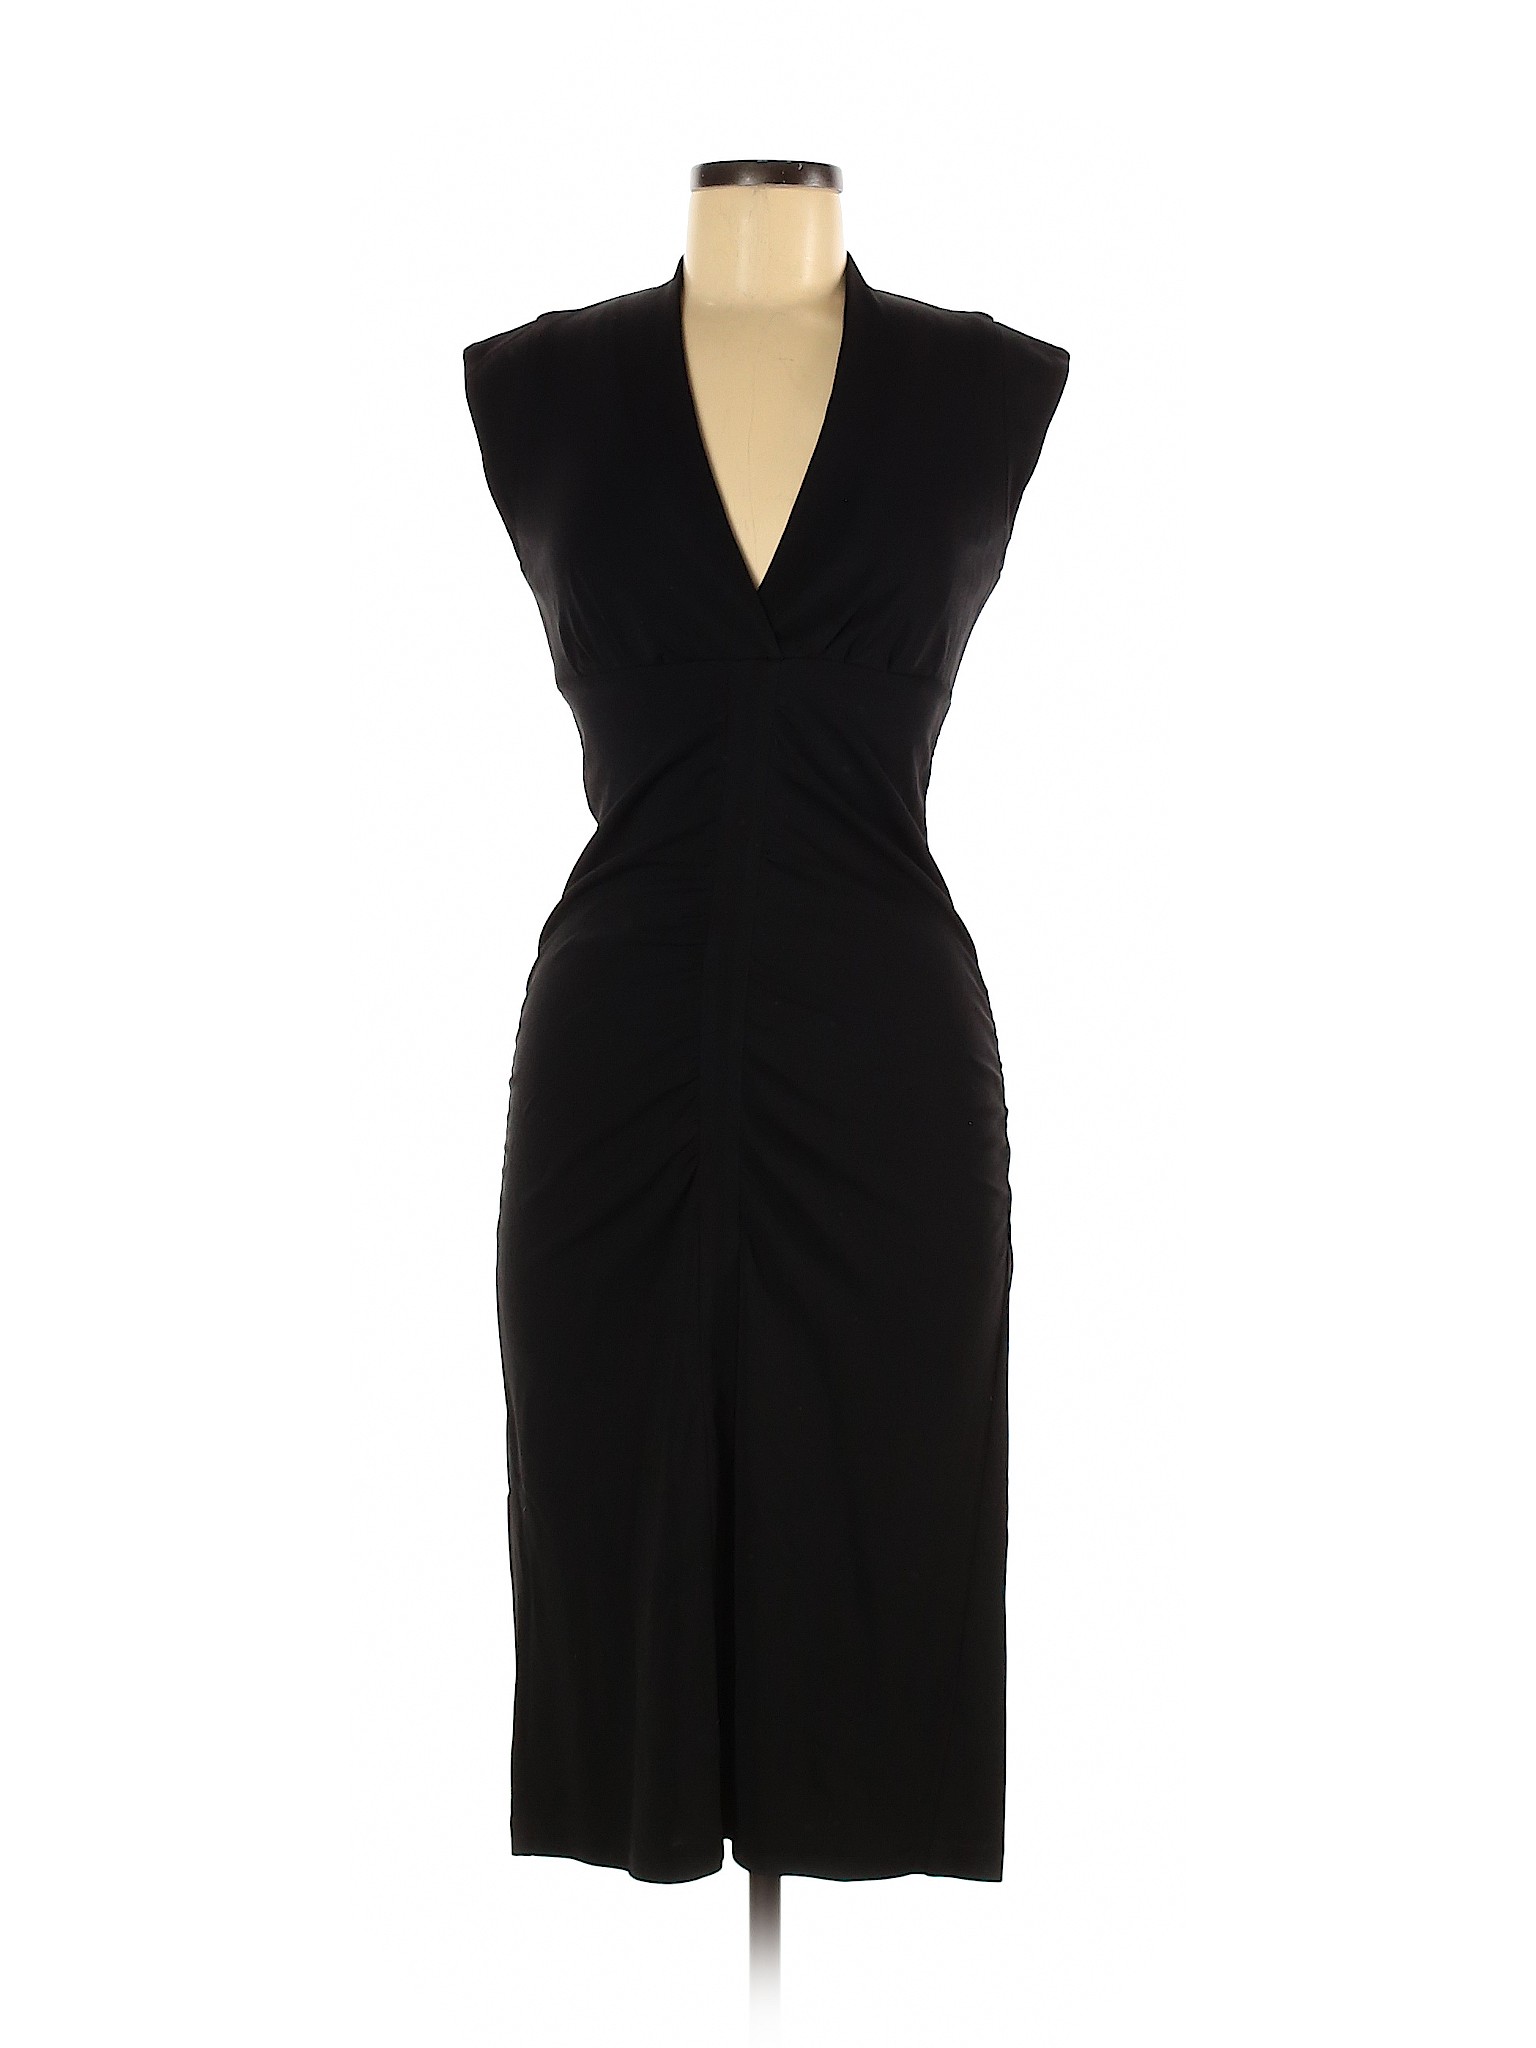 Nicole Miller Collection Women Black Casual Dress 6 | eBay